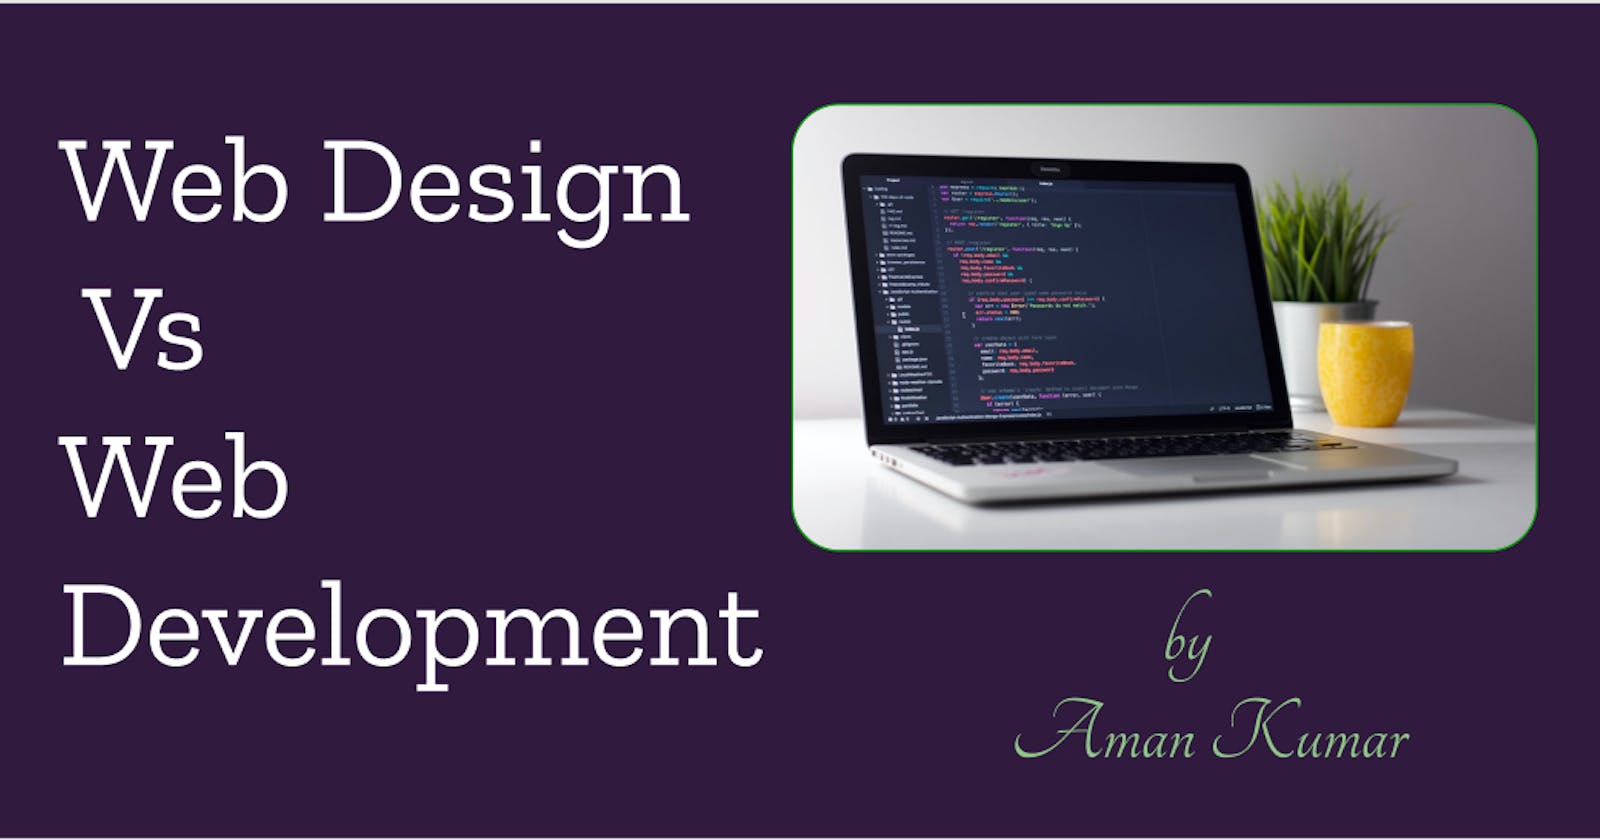 Web Design Vs Web Development